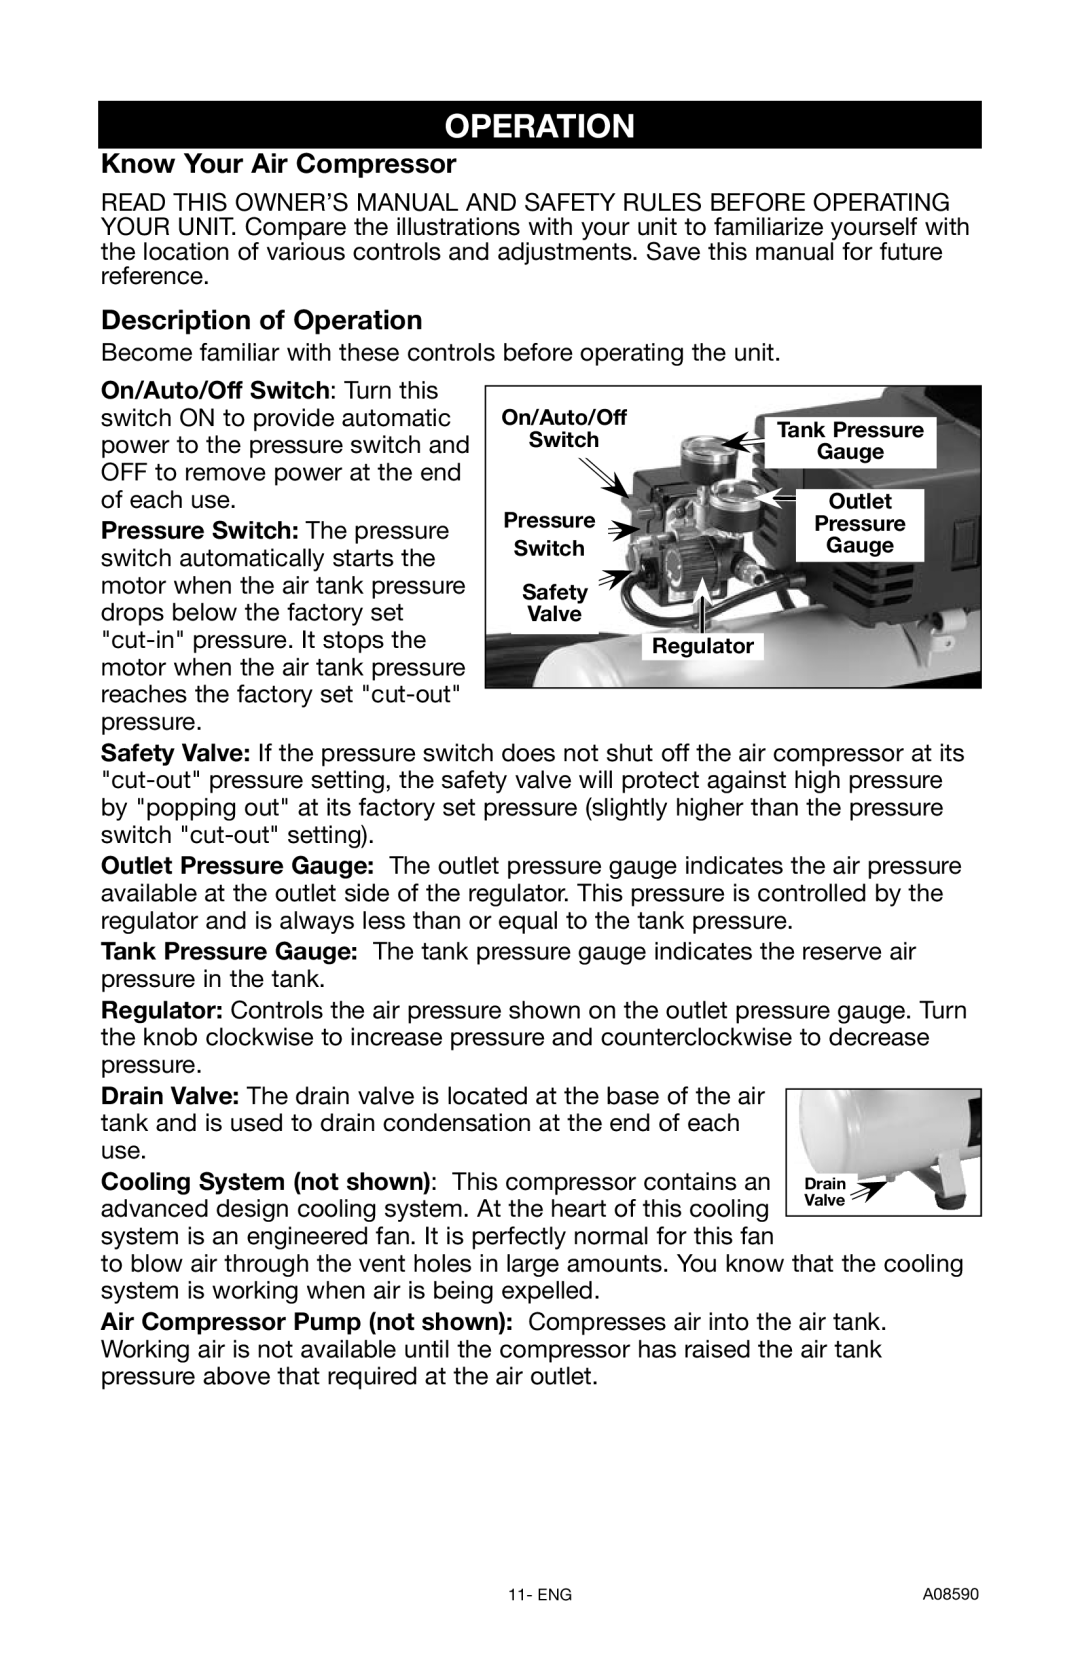 Delta A08590 instruction manual Know Your Air Compressor, Description of Operation 